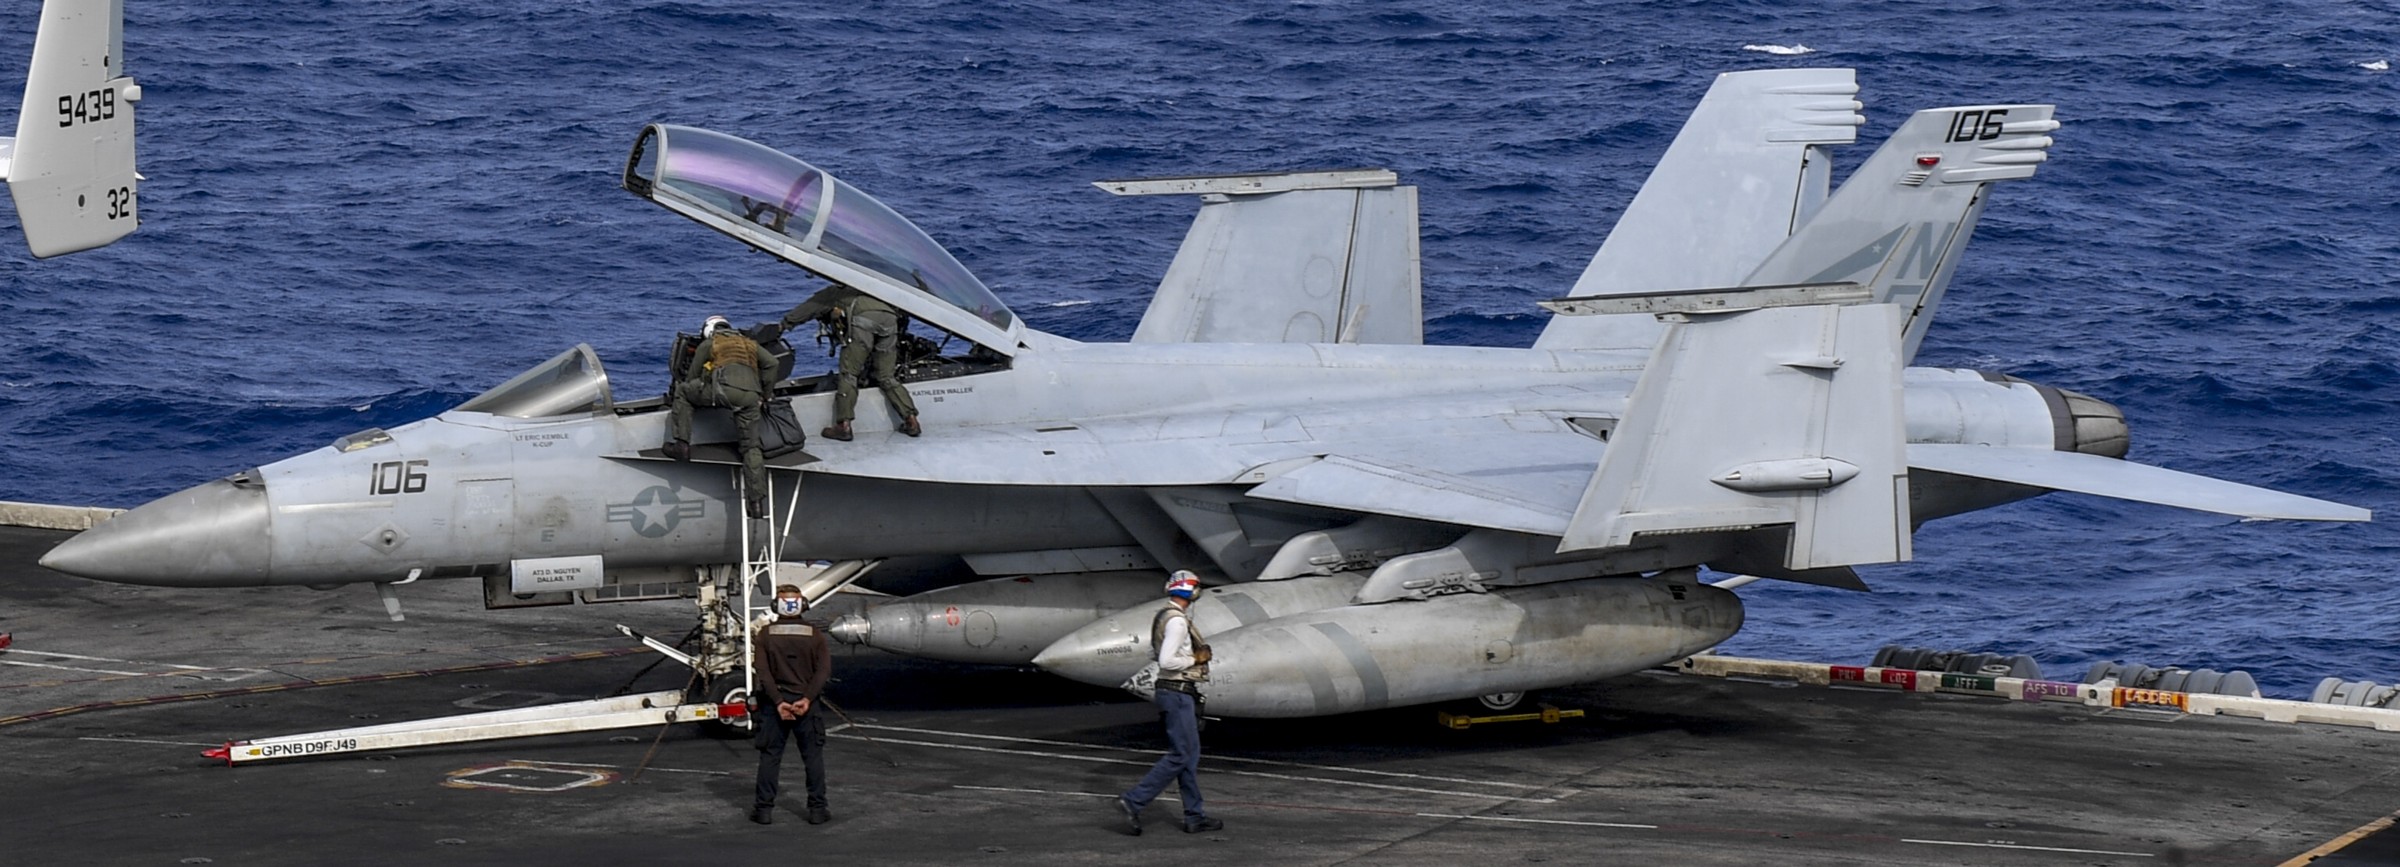 vfa-2 bounty hunters strike fighter squadron us navy f/a-18f super hornet carrier air wing cvw-2 uss carl vinson cvn-70 102